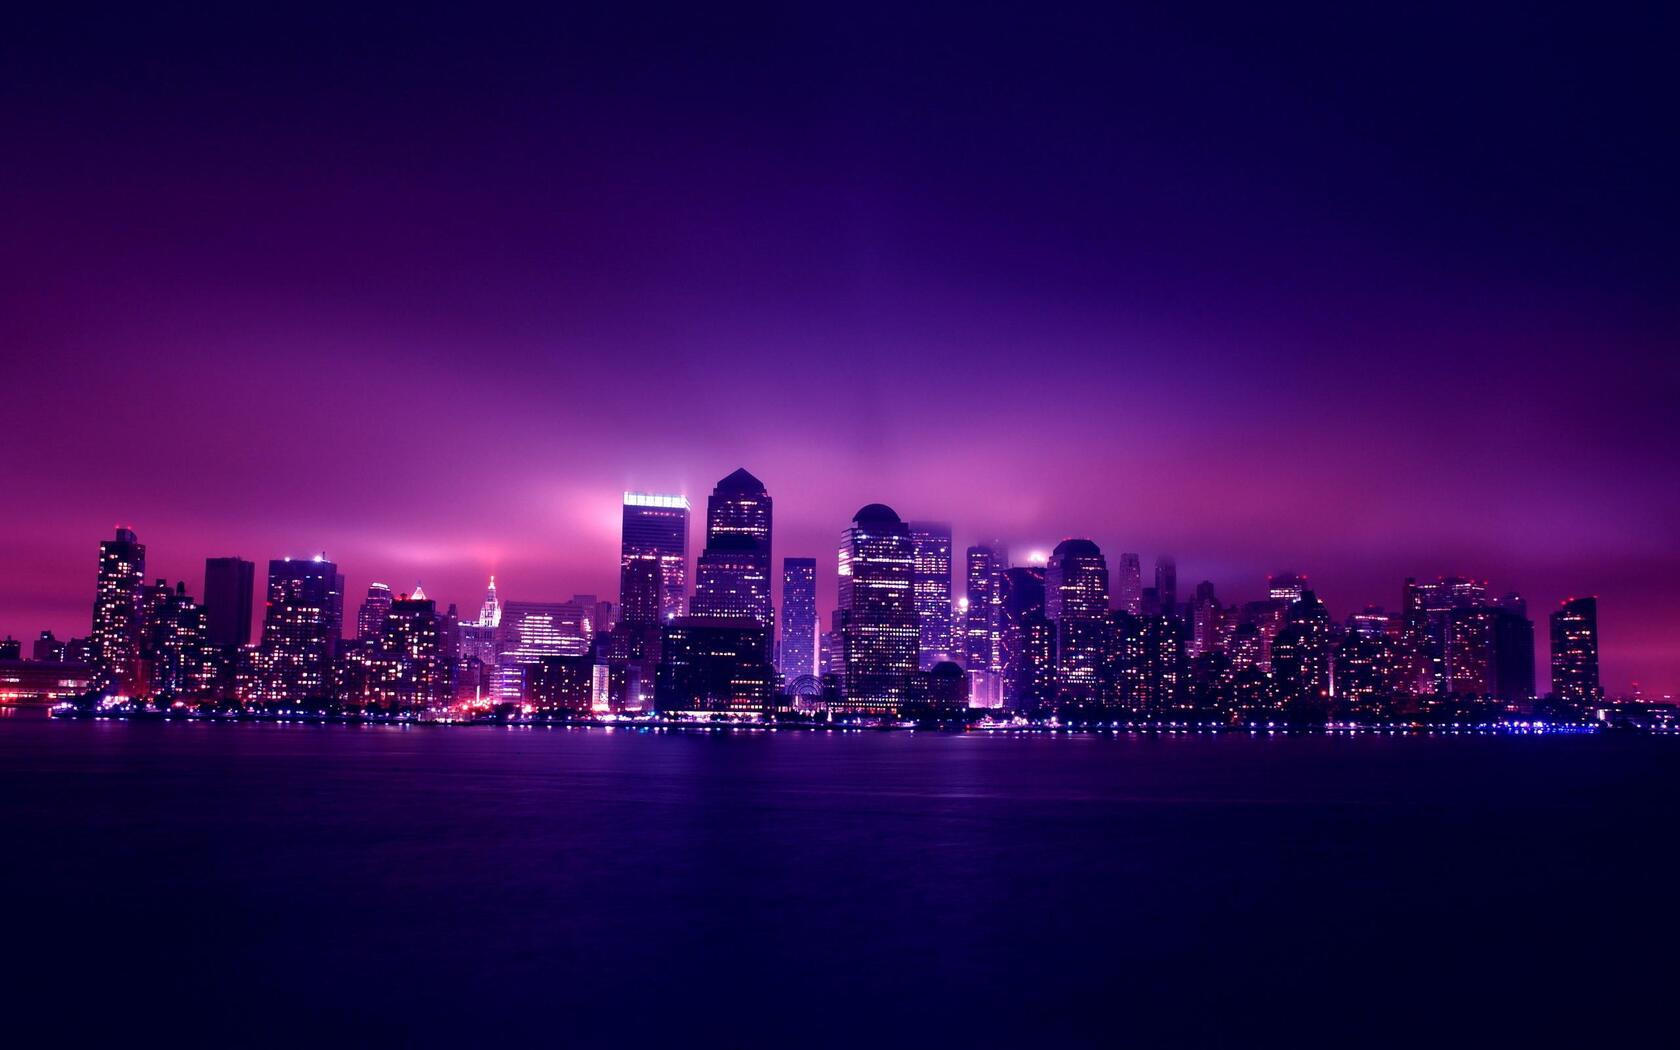 City lights at night wallpaper download | All Wallpapers | Pinterest | City lights - Skyline